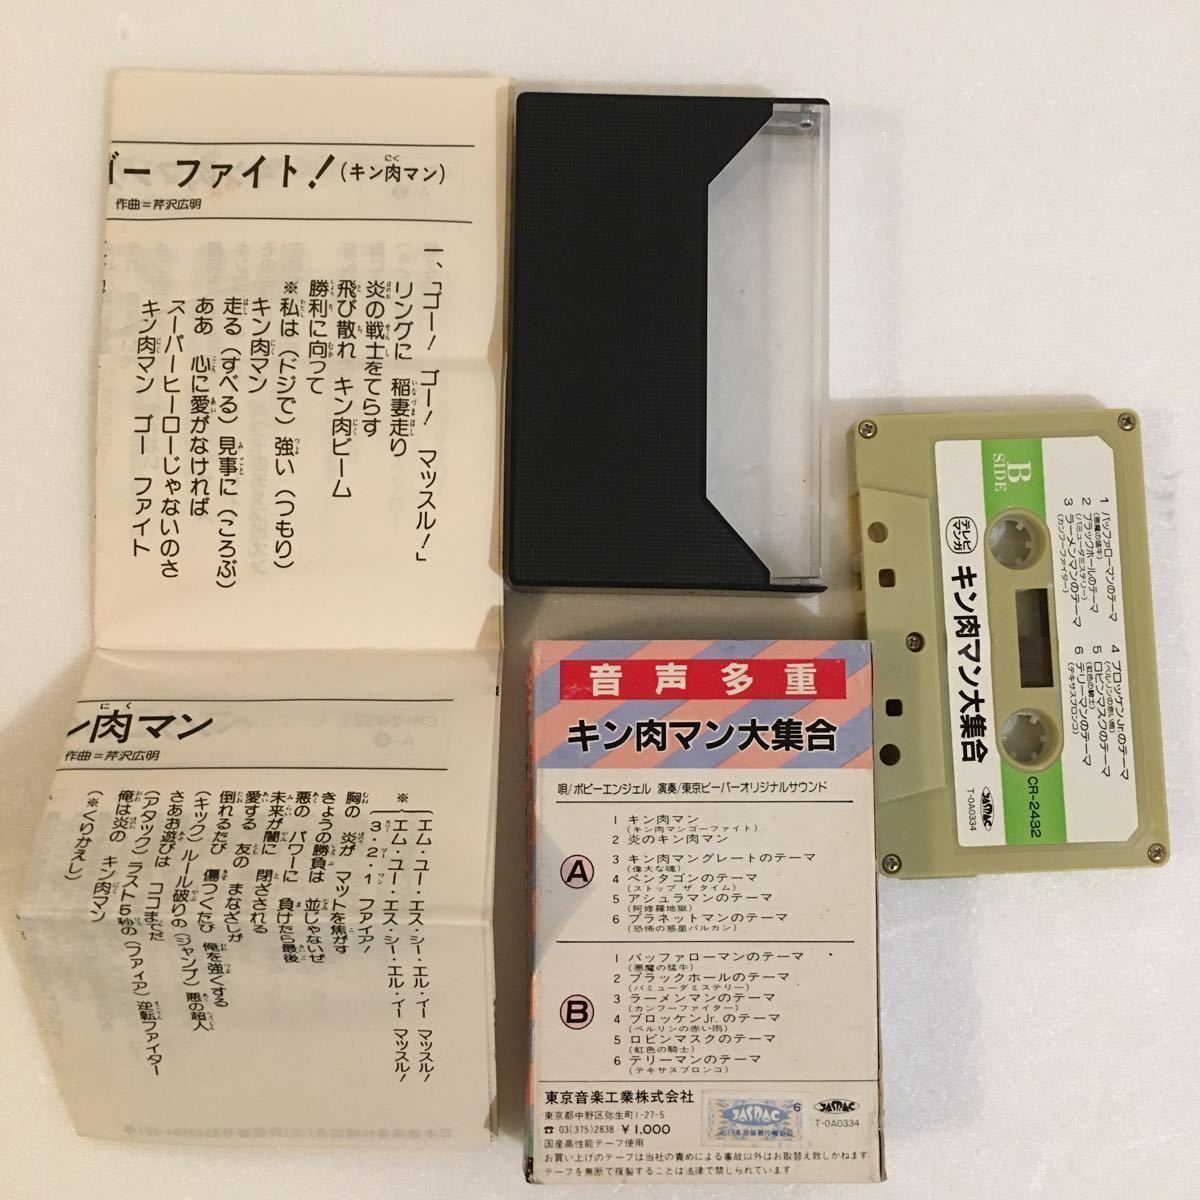  cassette tape [ Kinnikuman large set ] secondhand goods / anime song / Pachi son/ poppy Angel /ashu llama n Terry man Robin mask. Thema / retro 